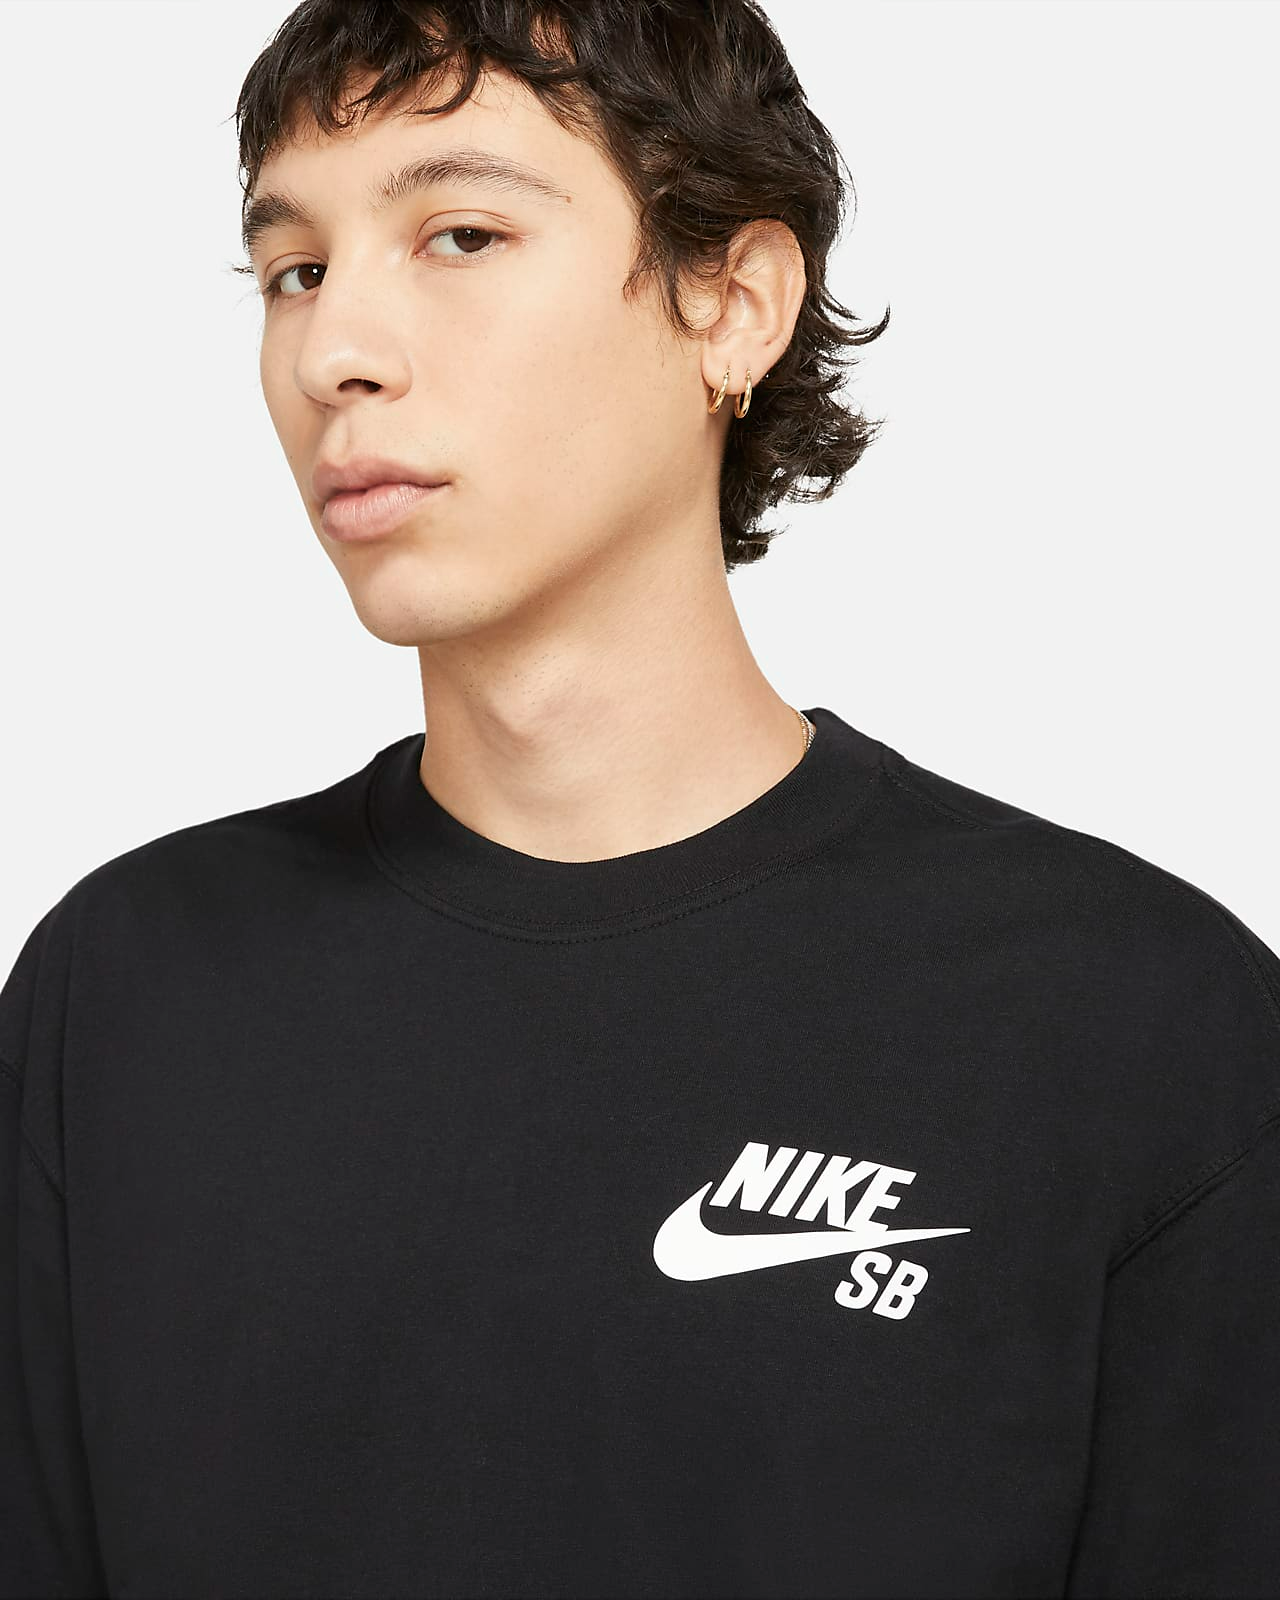 Nike Sb T-shirt